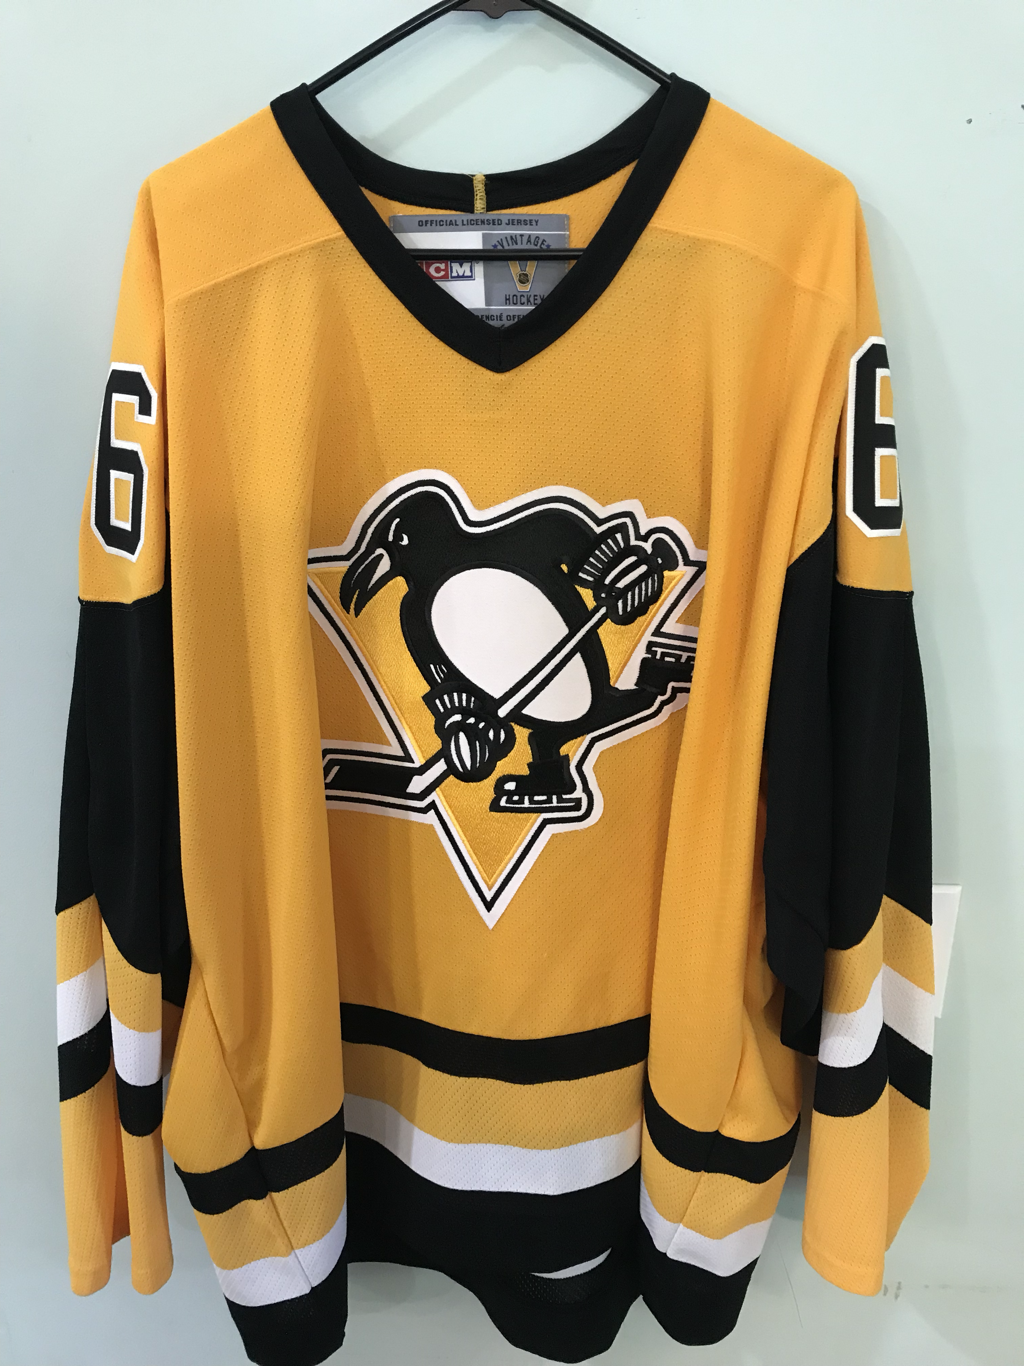 penguins gold jersey